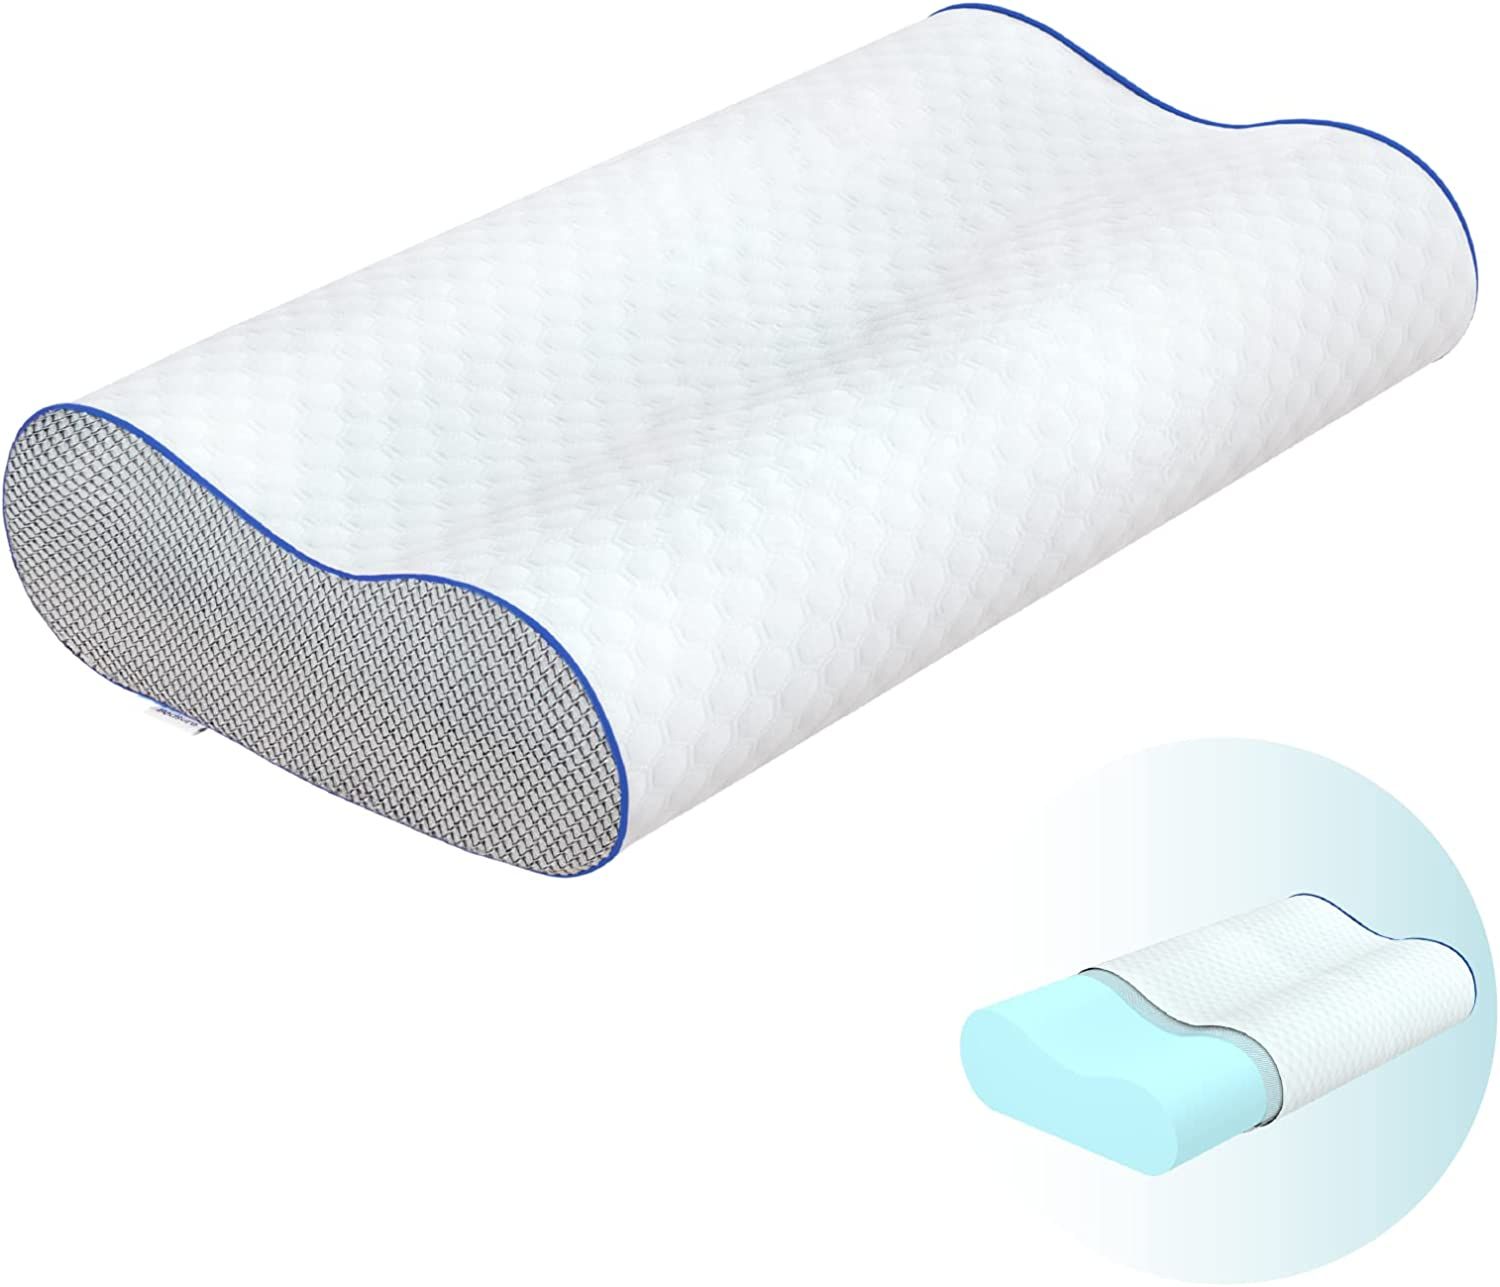 BEDSURE Neck Support Contour Pillow - Memory Foam Pillow for Sleeping, Ergonomic Pillow for Neck ... | Amazon (US)